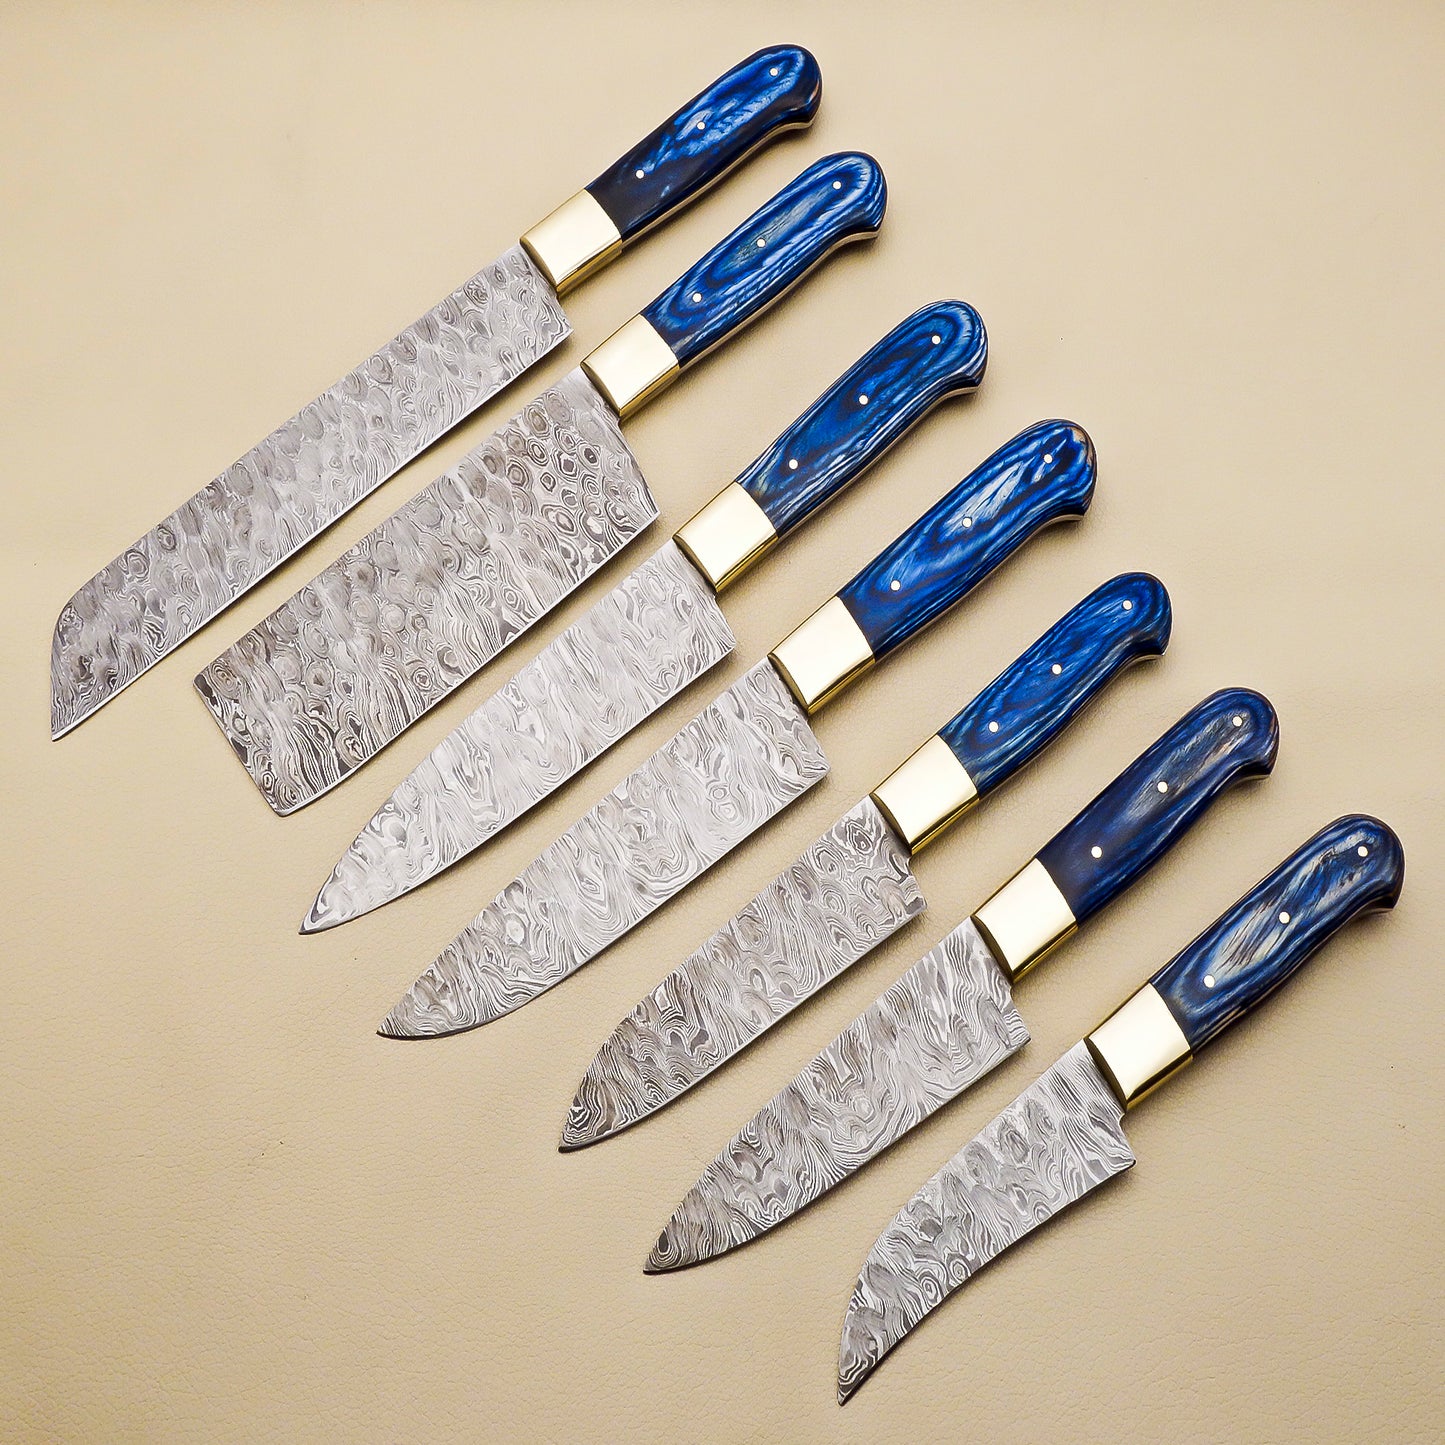 Damascus Steel Kitchen / Chef Knives set with Blue Pakka Wood